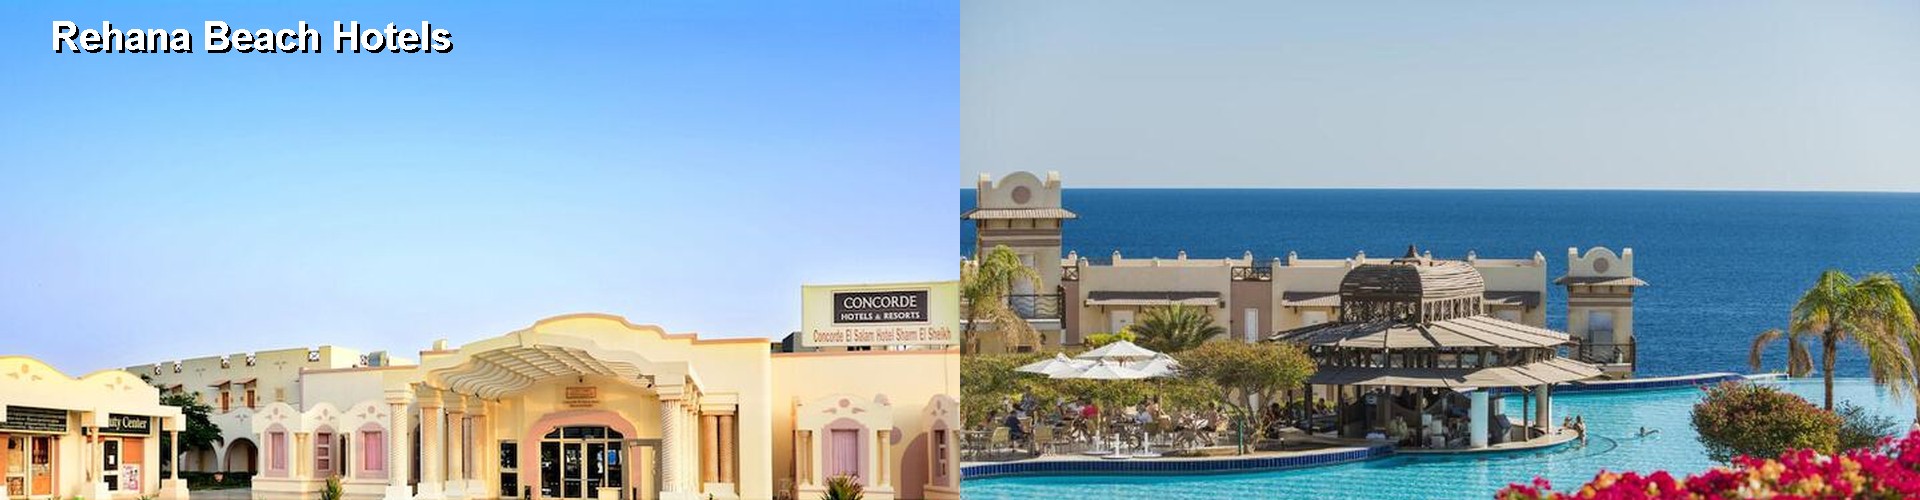 5 Best Hotels near Rehana Beach